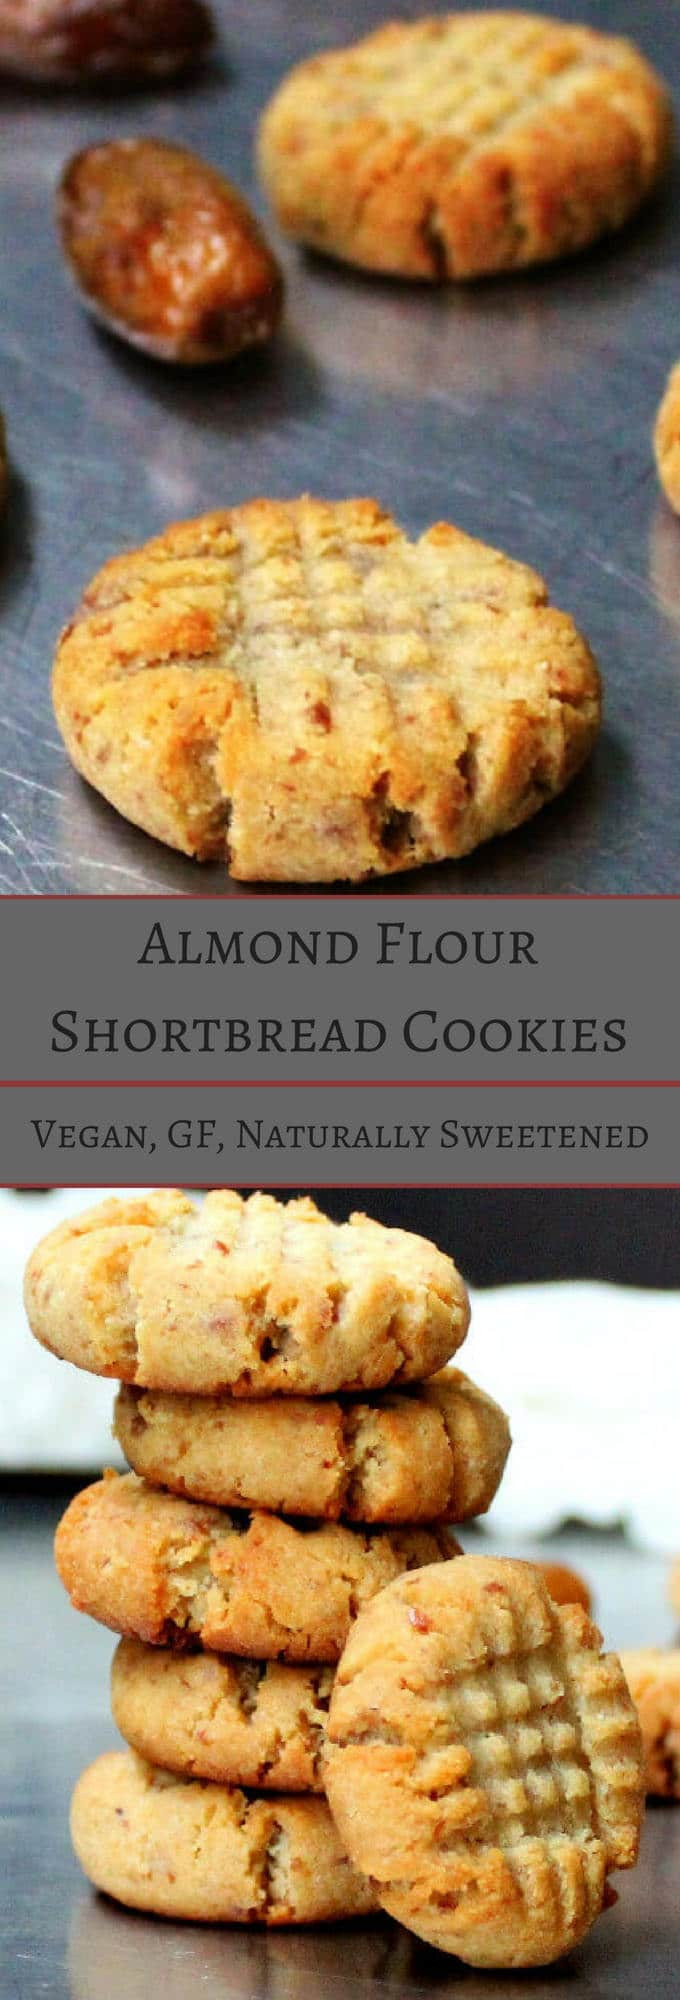 Almond Flour Shortbread Cookies
 Vegan Almond Flour Shortbread Cookies naturally sweetened